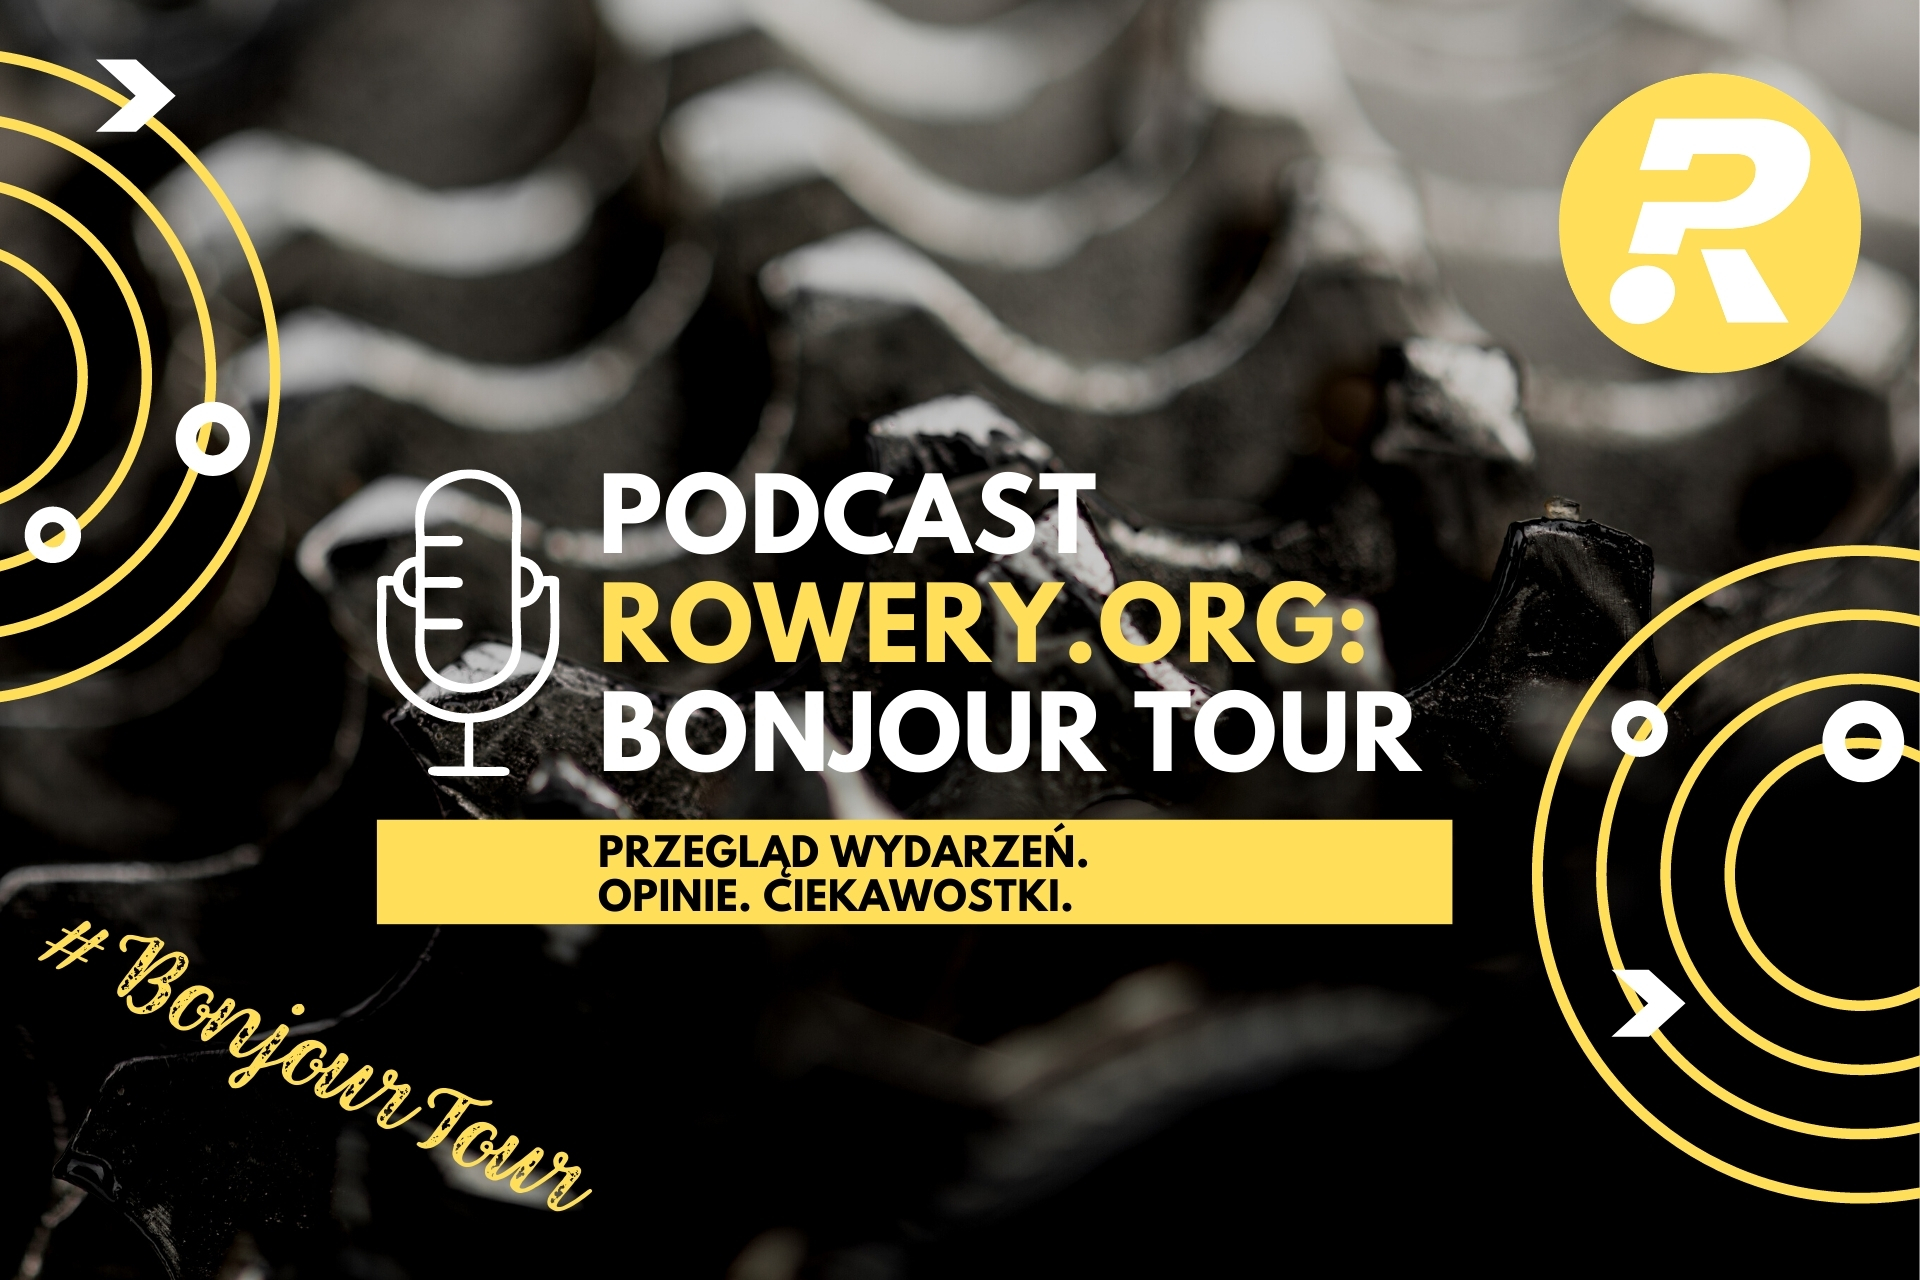 Bonjour Tour – kolarska audycja o Tour de France już na Spotify